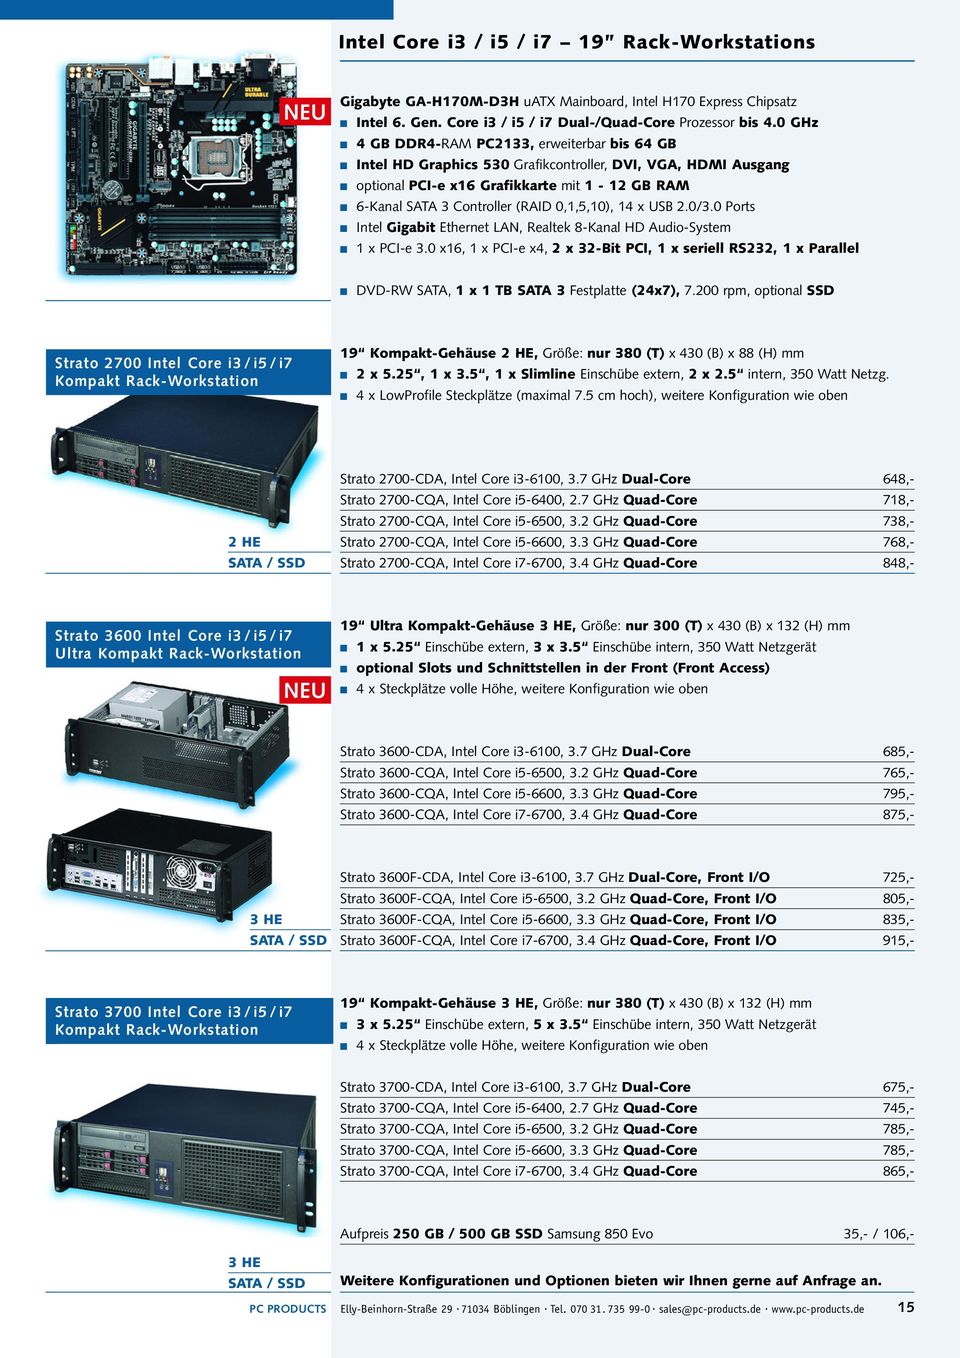 0,1,5,10), 14 x USB 2.0/3.0 Ports Intel Gigabit Ethernet LAN, Realtek 8-Kanal HD Audio-System 1 x PCI-e 3.